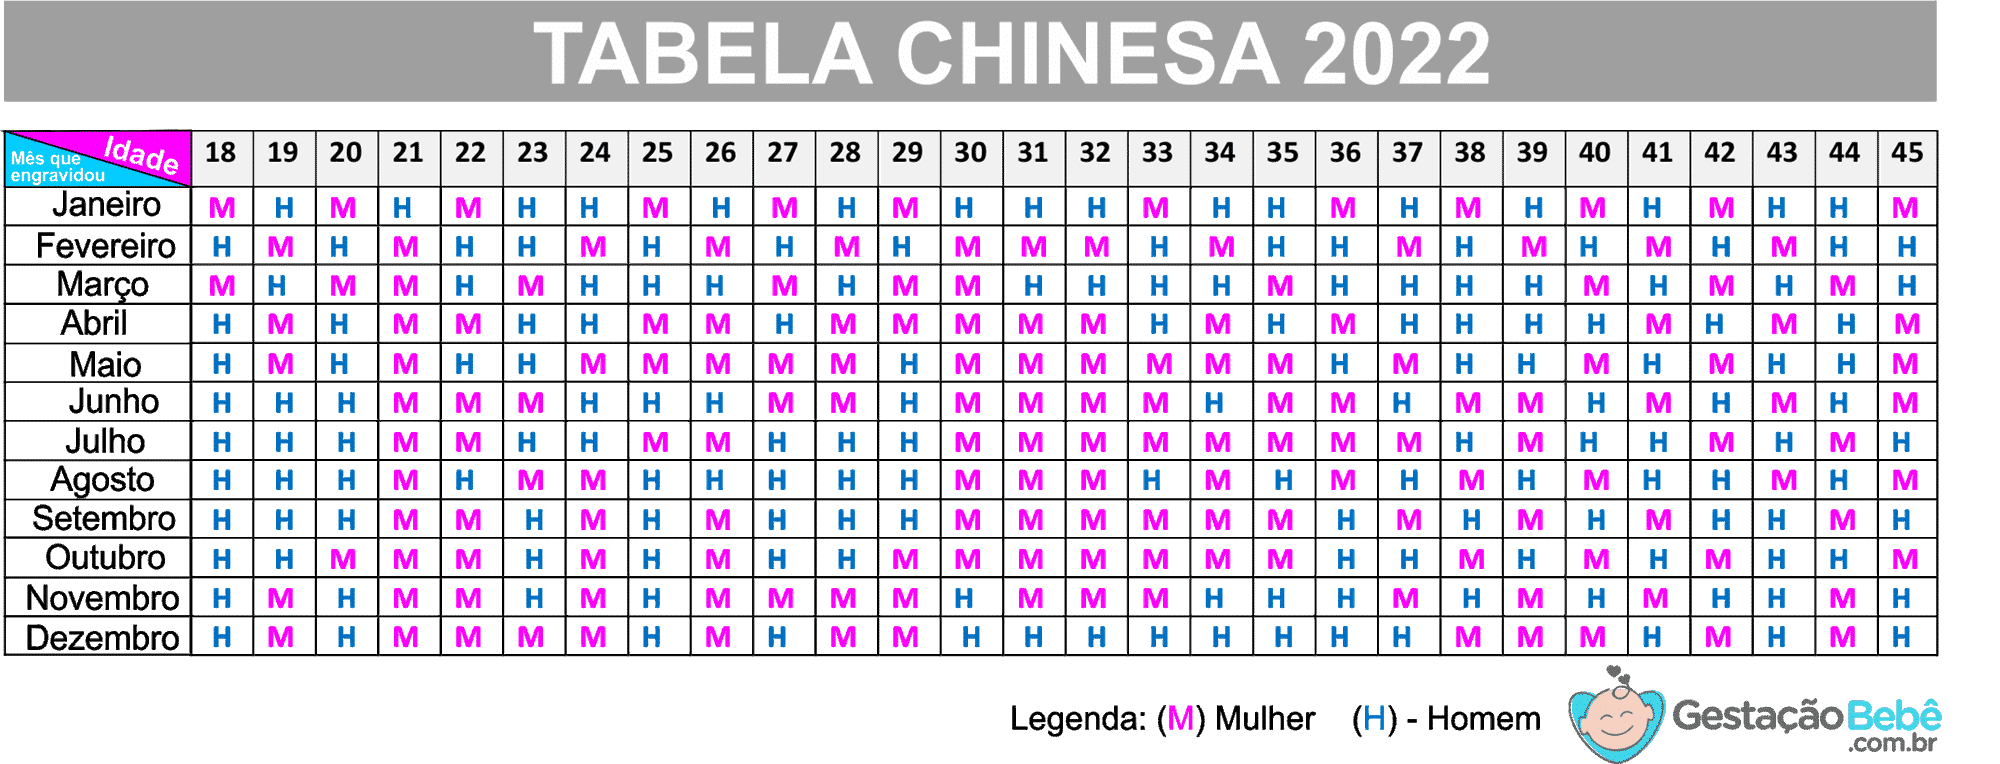 tabela chinesa 2022 verdadeira